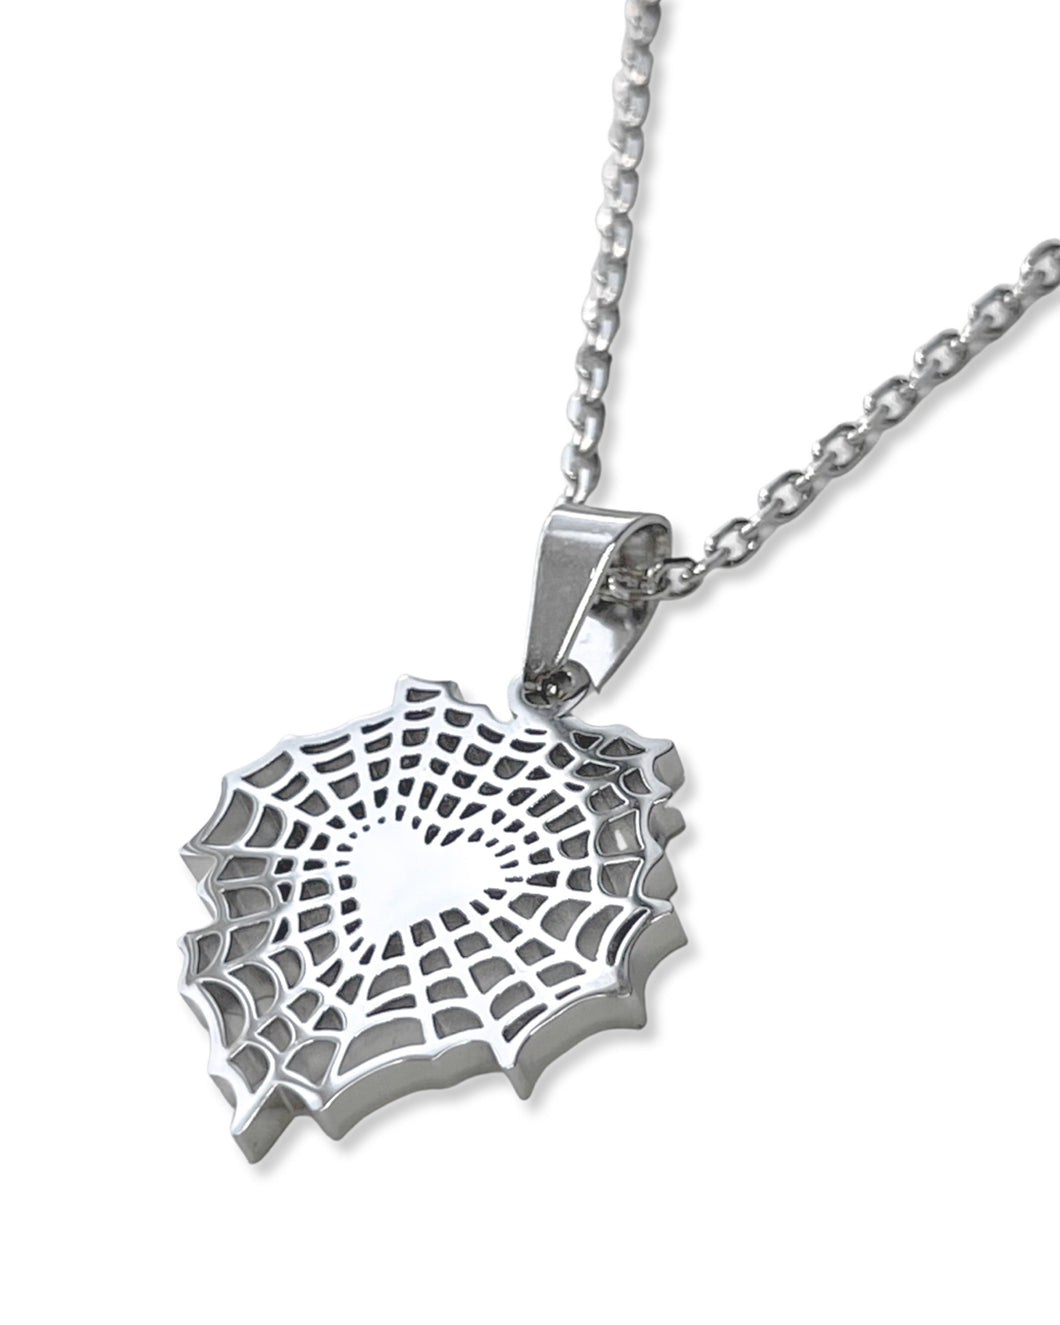 Heartweb Necklace